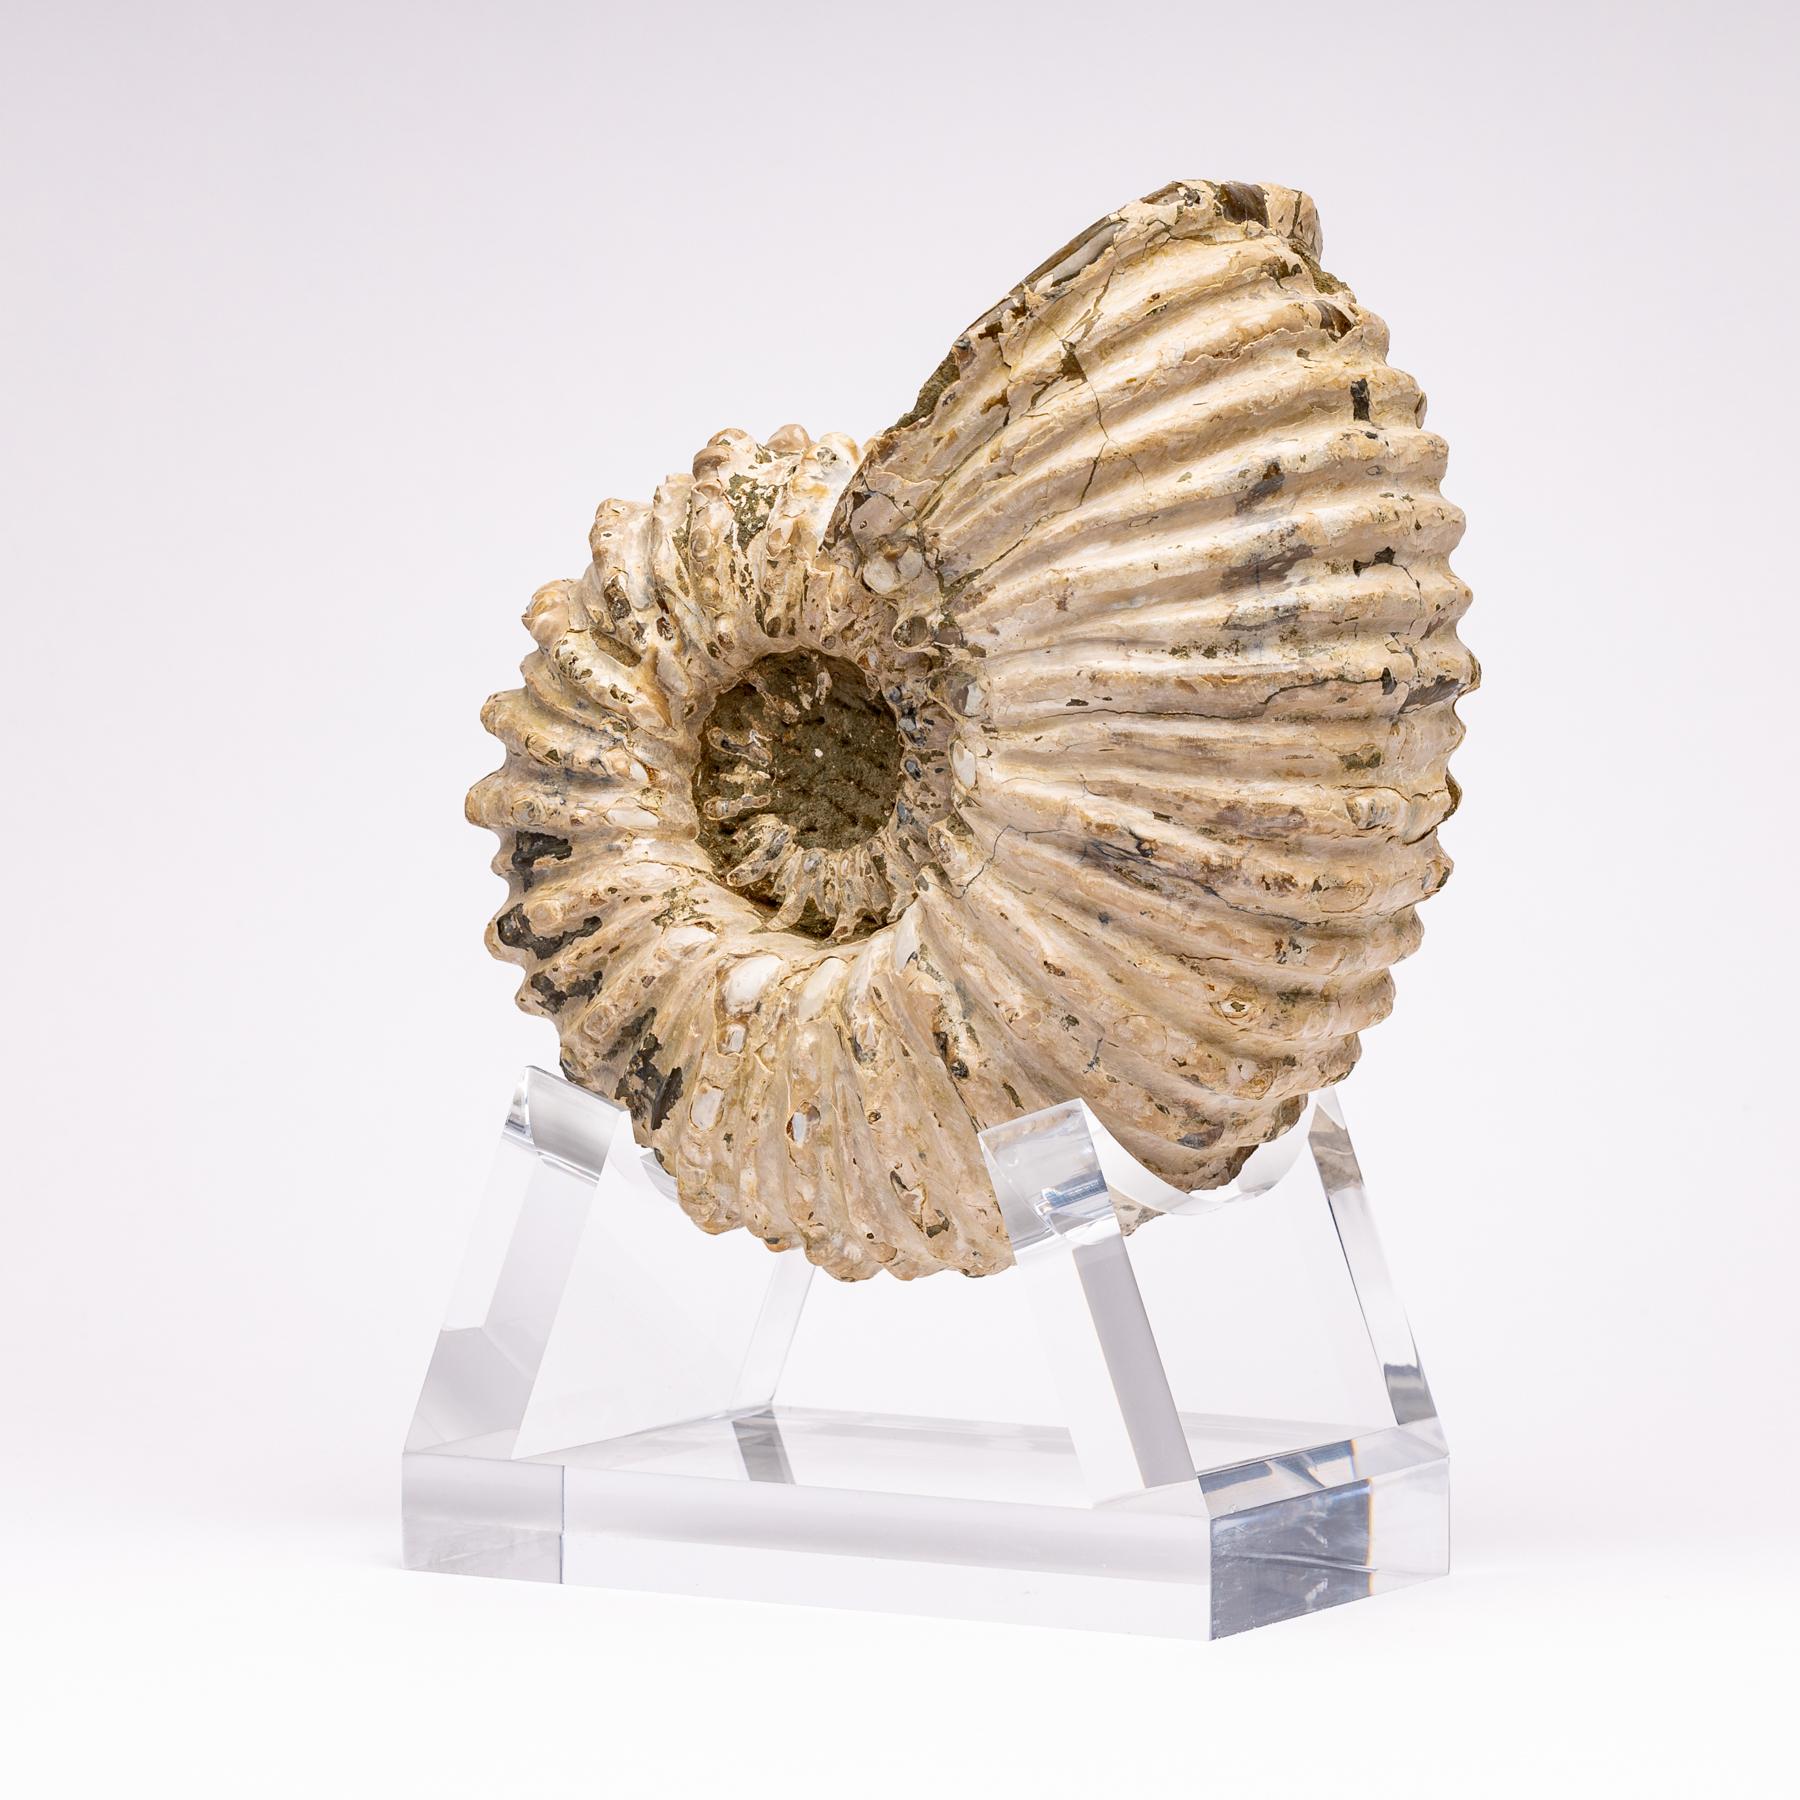 Mexican Madagascar Douvilleiceras Ammonite Fossil on Acrylic Base, Cretaceous Period